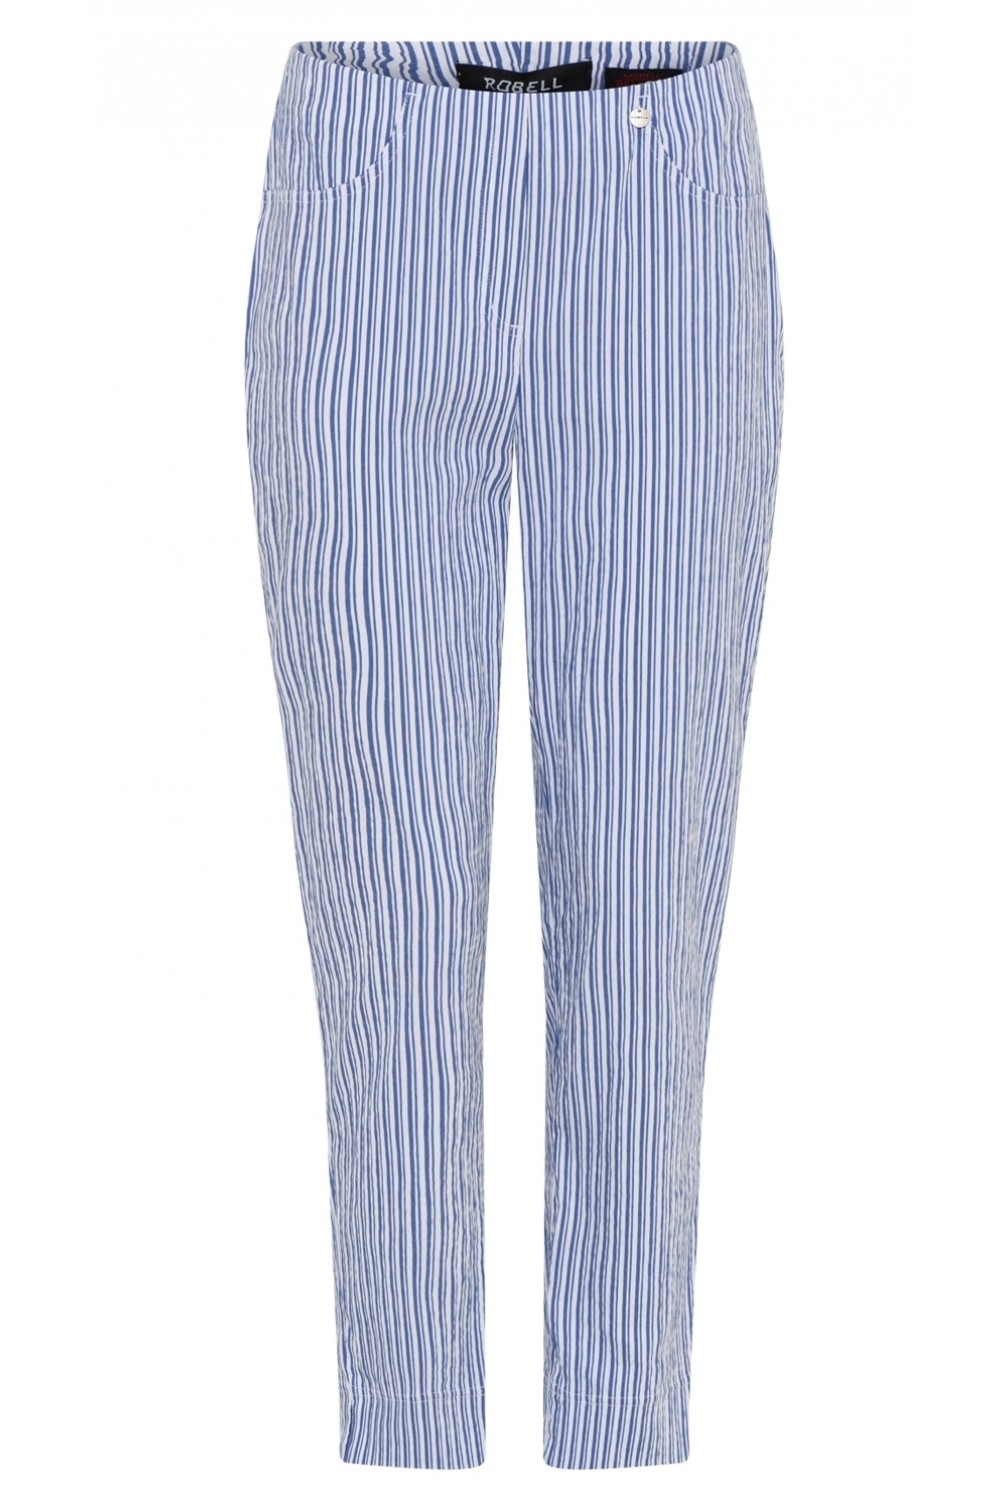 Robell Trousers Bella 09 Seersucker Stripe 7/8 Crop French Blue/White